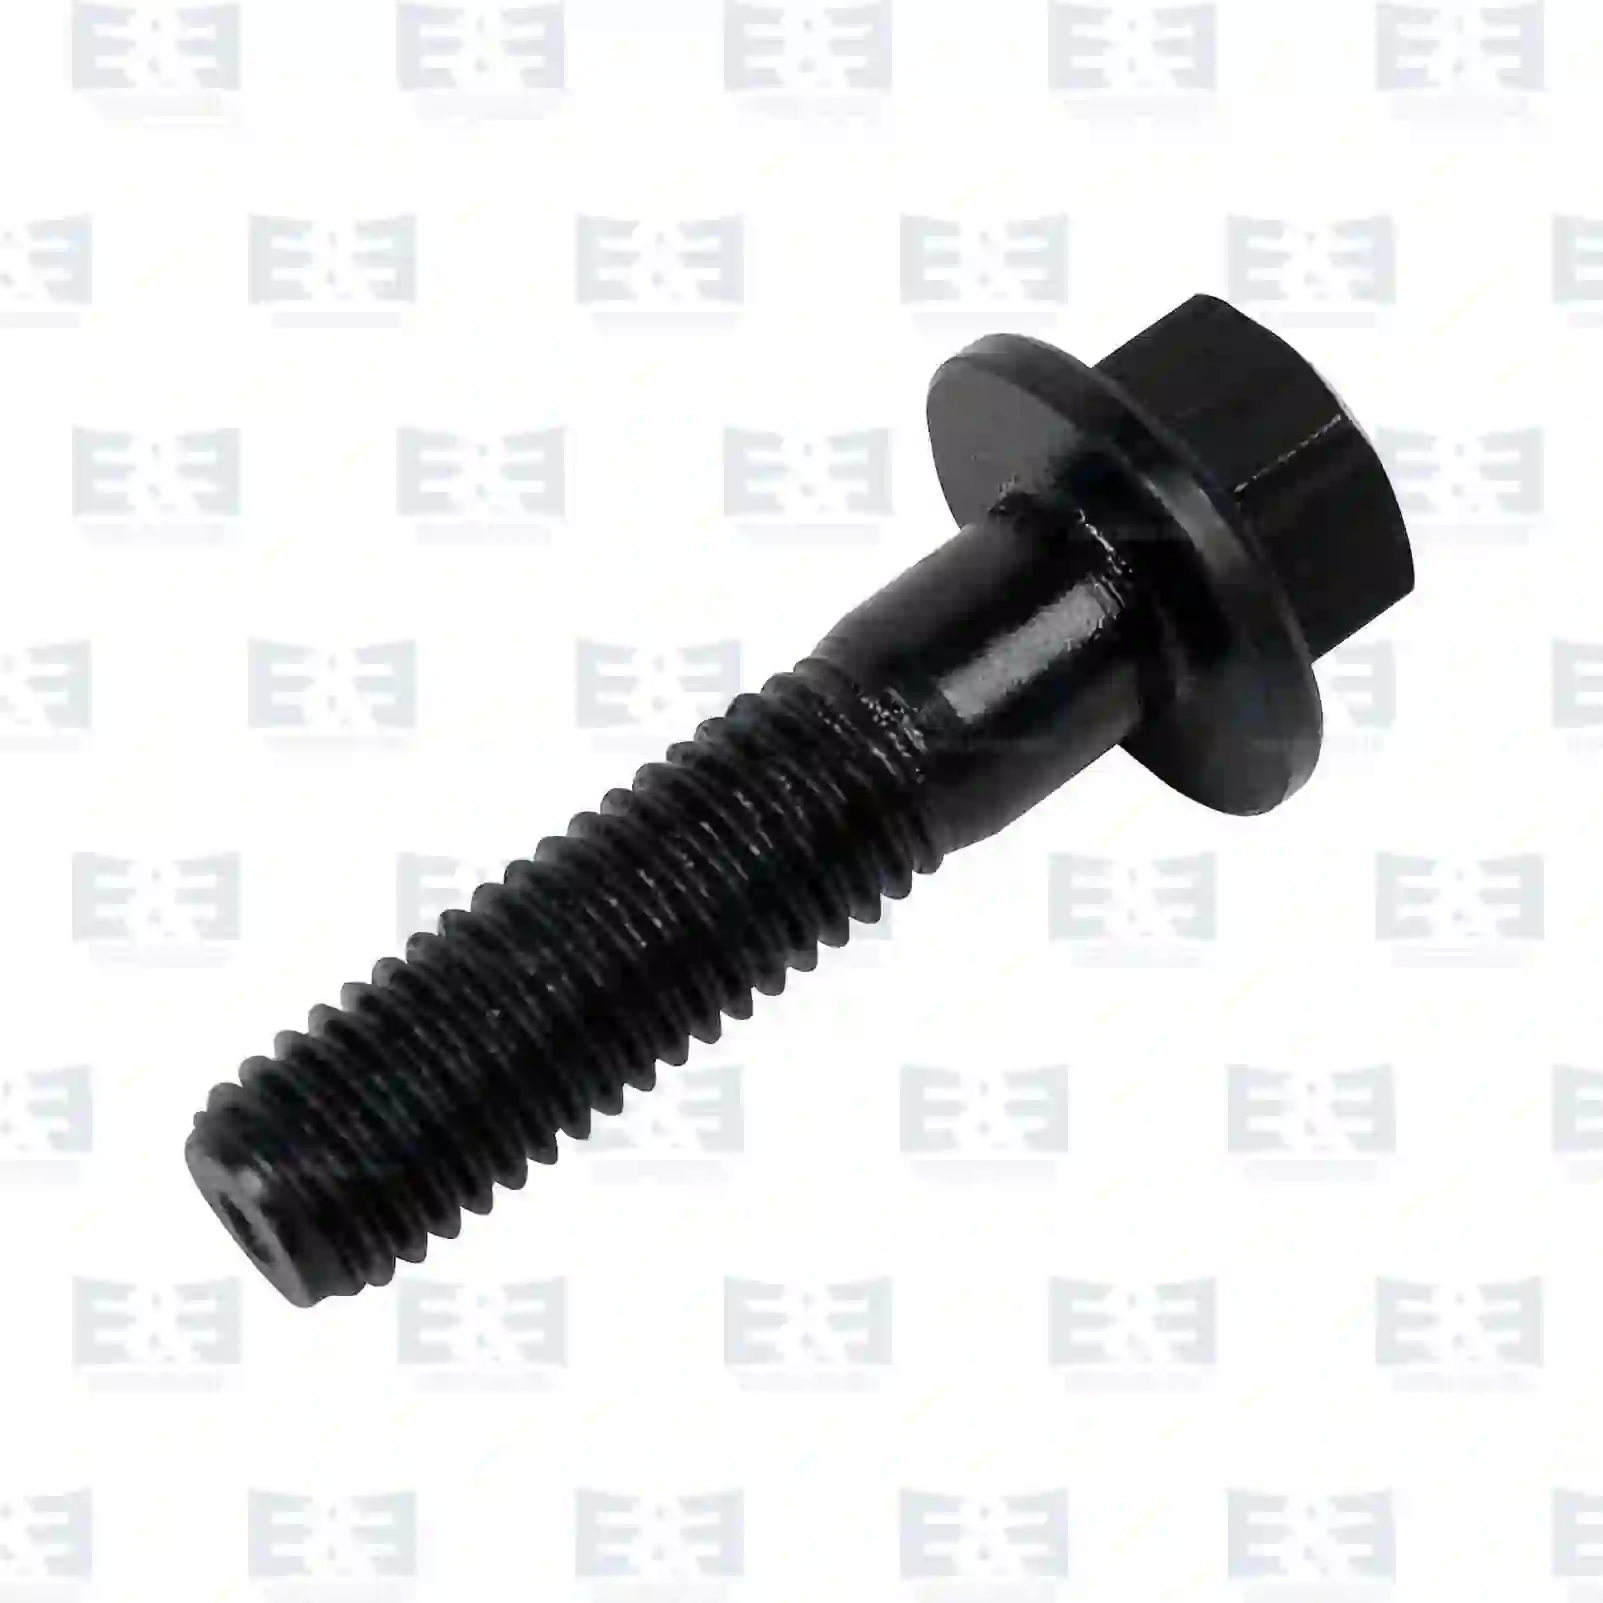  Screw || E&E Truck Spare Parts | Truck Spare Parts, Auotomotive Spare Parts